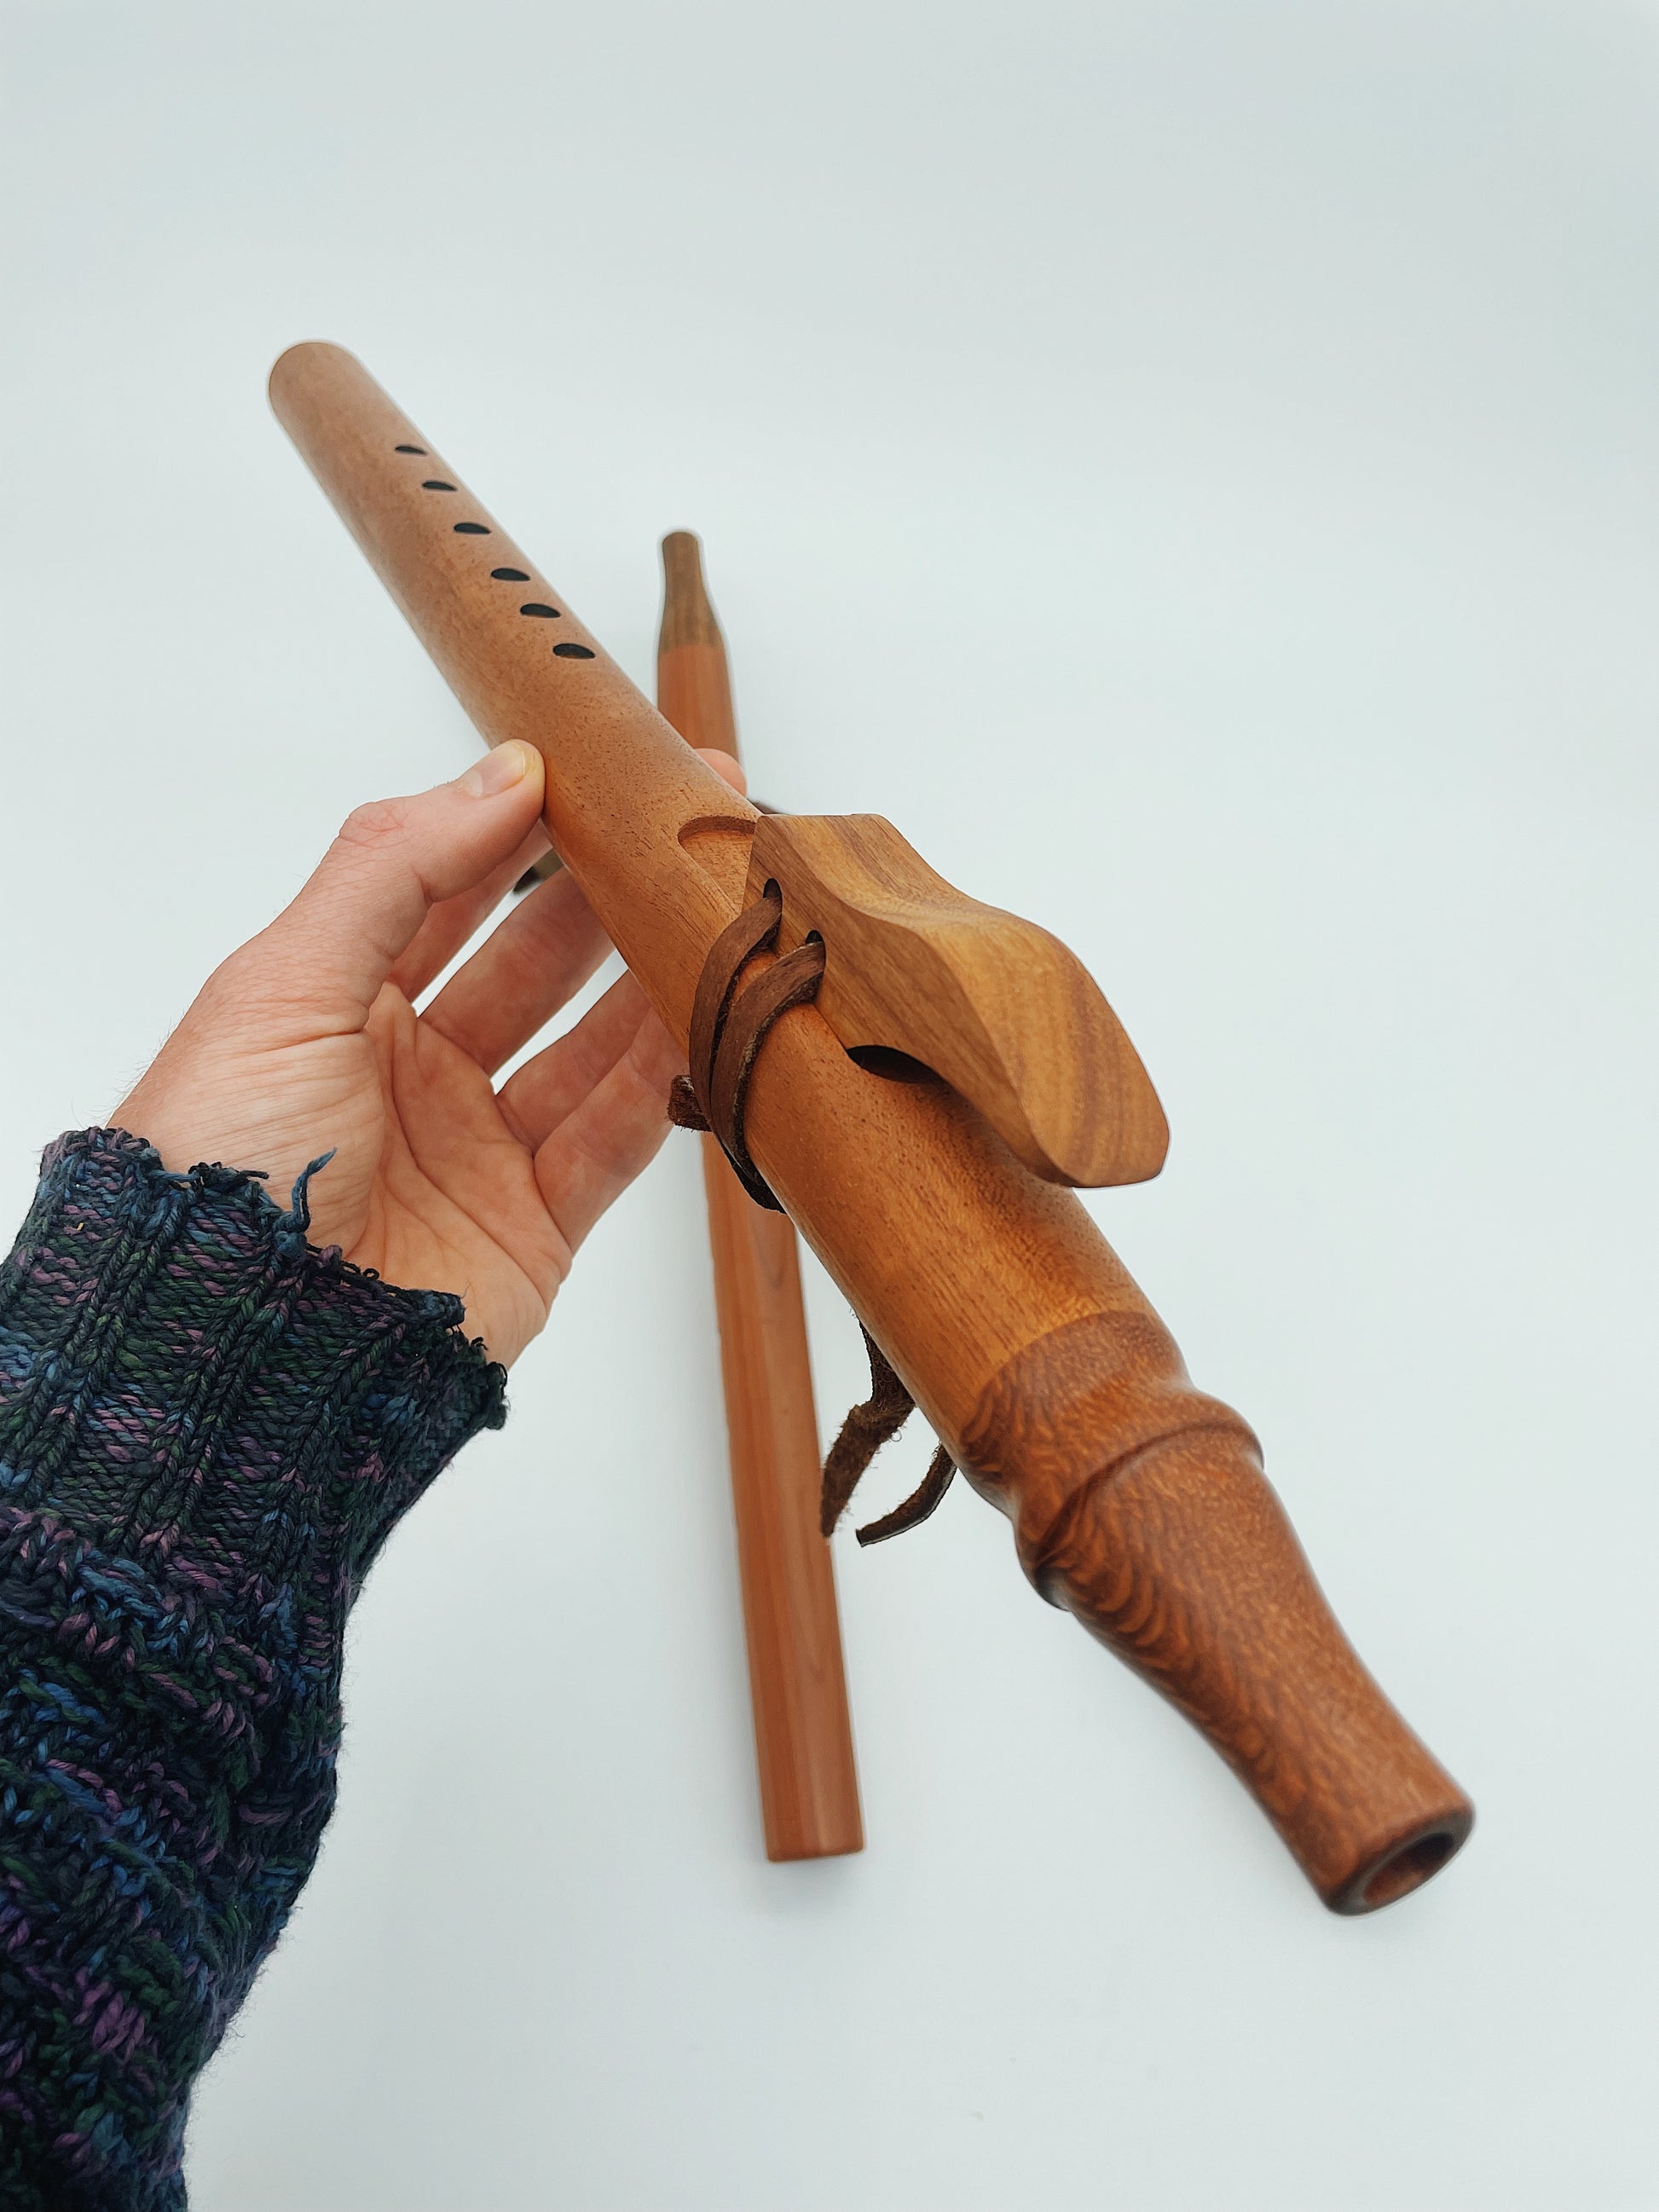 native wood flutes for sale